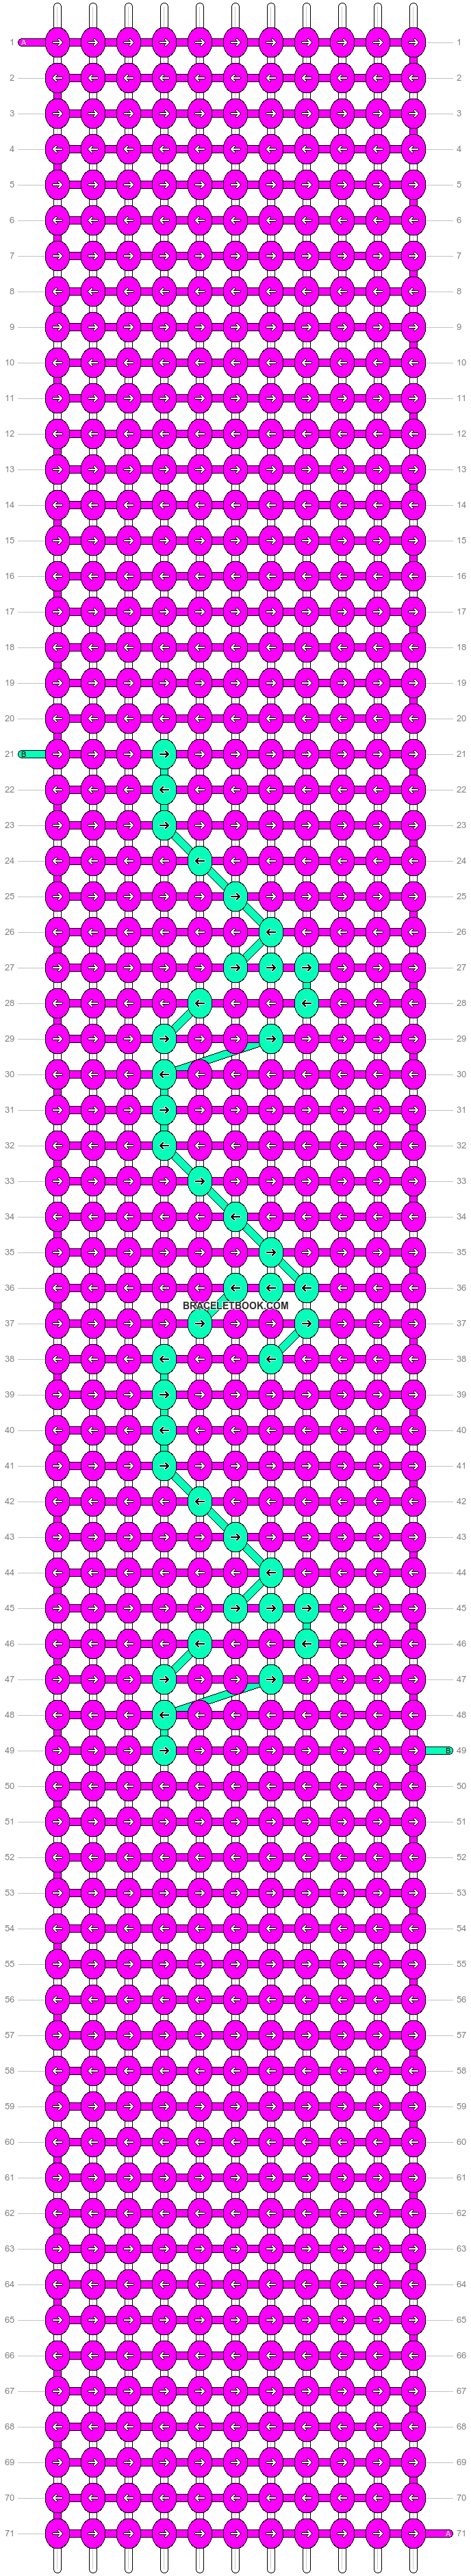 Alpha pattern #38672 variation #89116 pattern